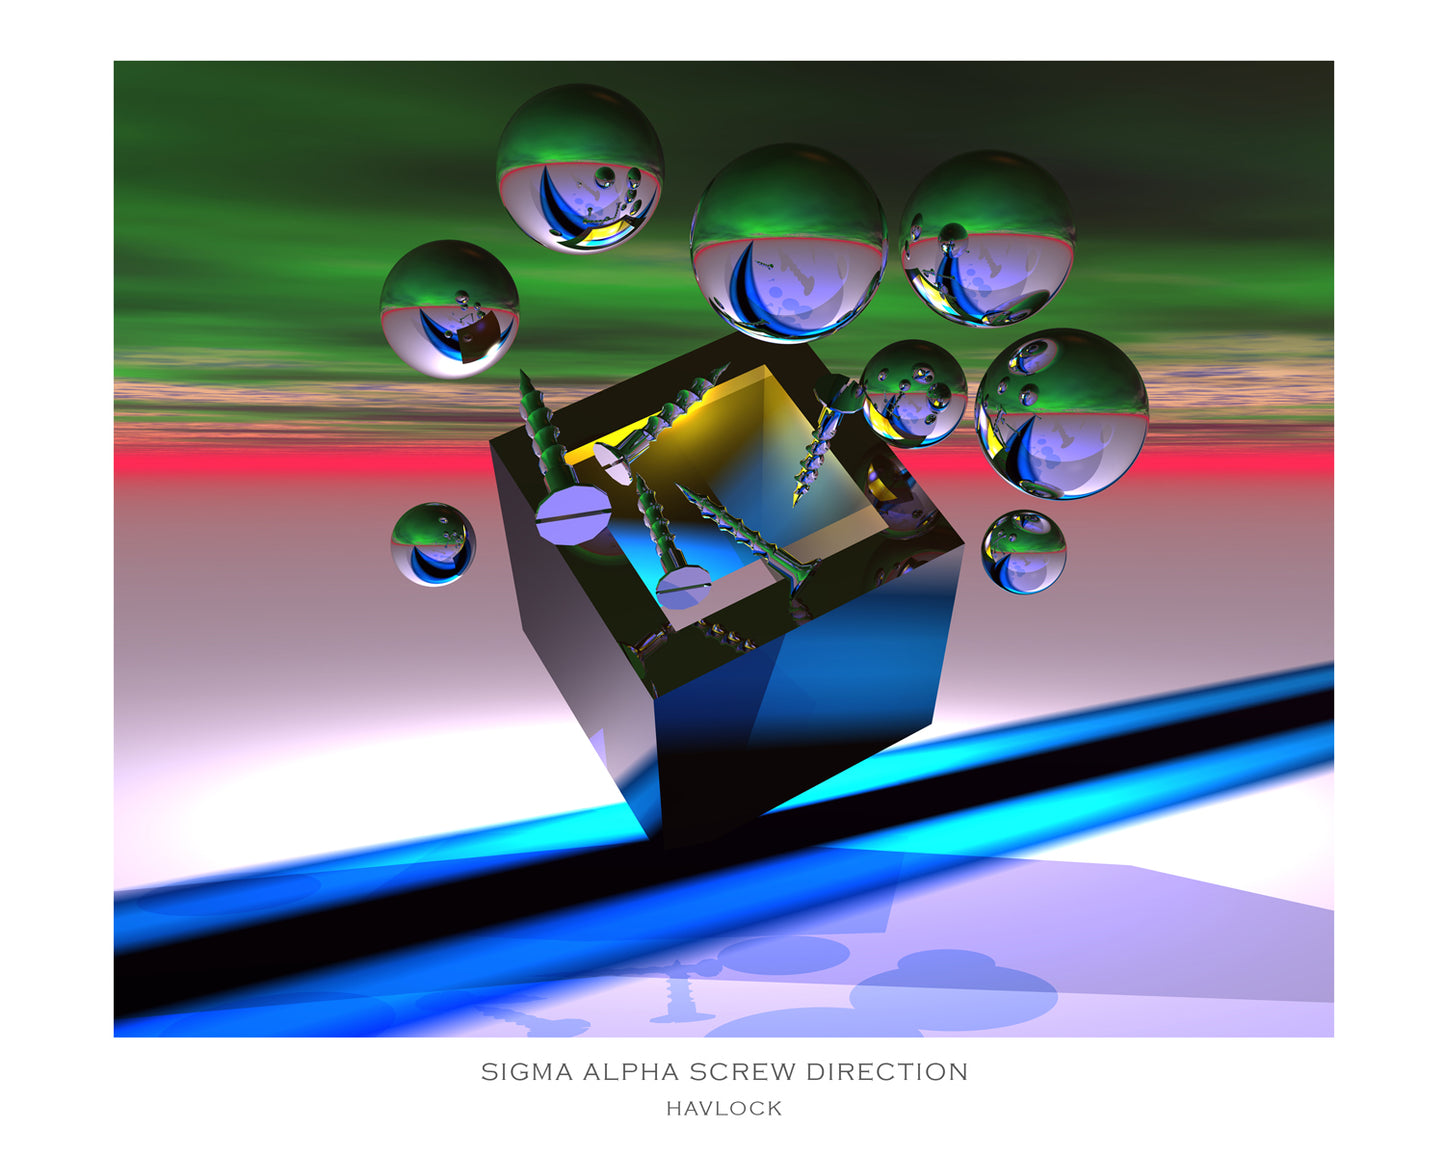 Sigma Alpha Screw Direction ~ Liquid Geometry - 8x10 Print in Collector's Sleeve